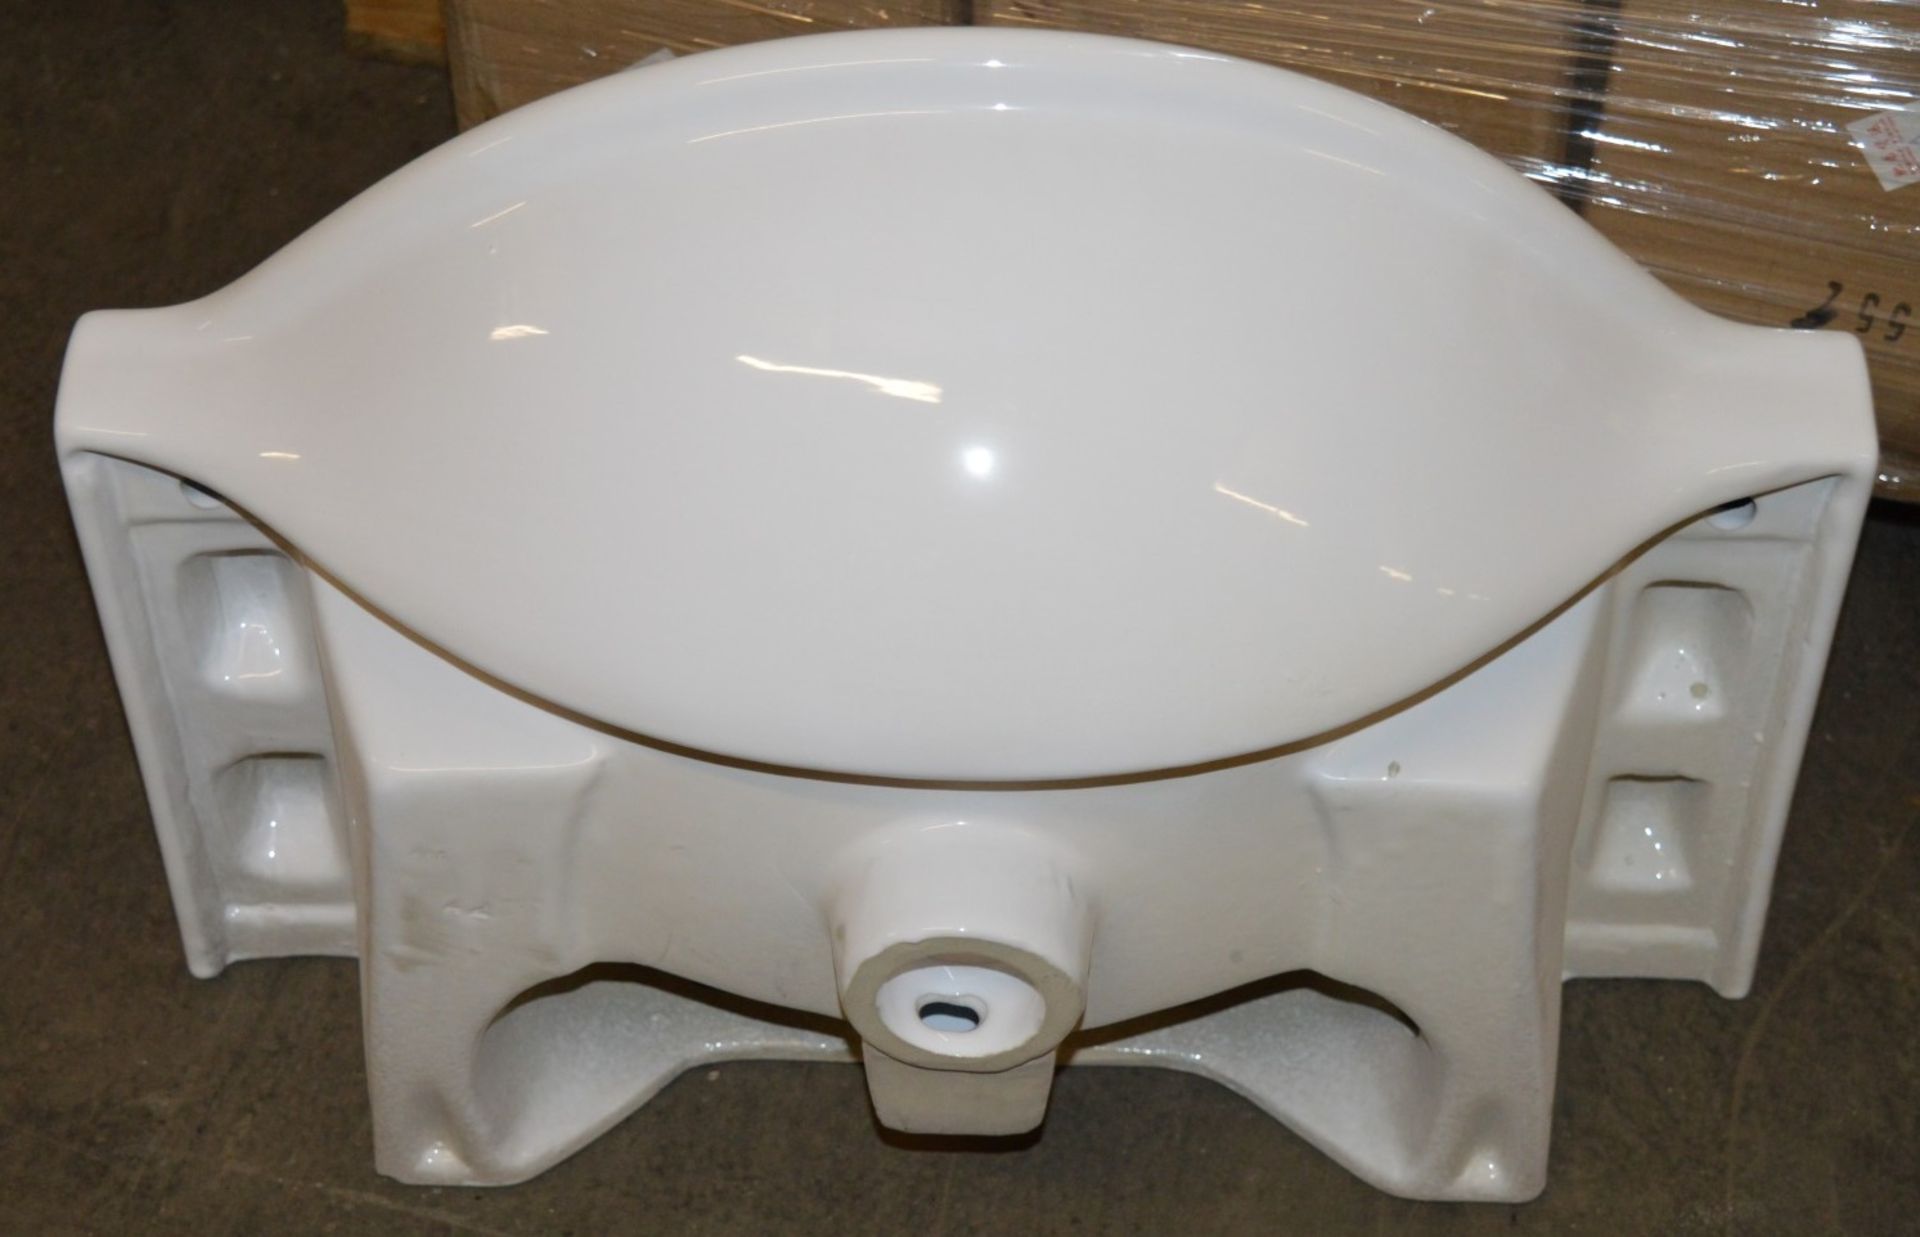 10 x Vogue Bathrooms LUNA Semi Recessed Bathroom Sink Basins - High Quality Ceramic Sink Basin - - Image 3 of 3